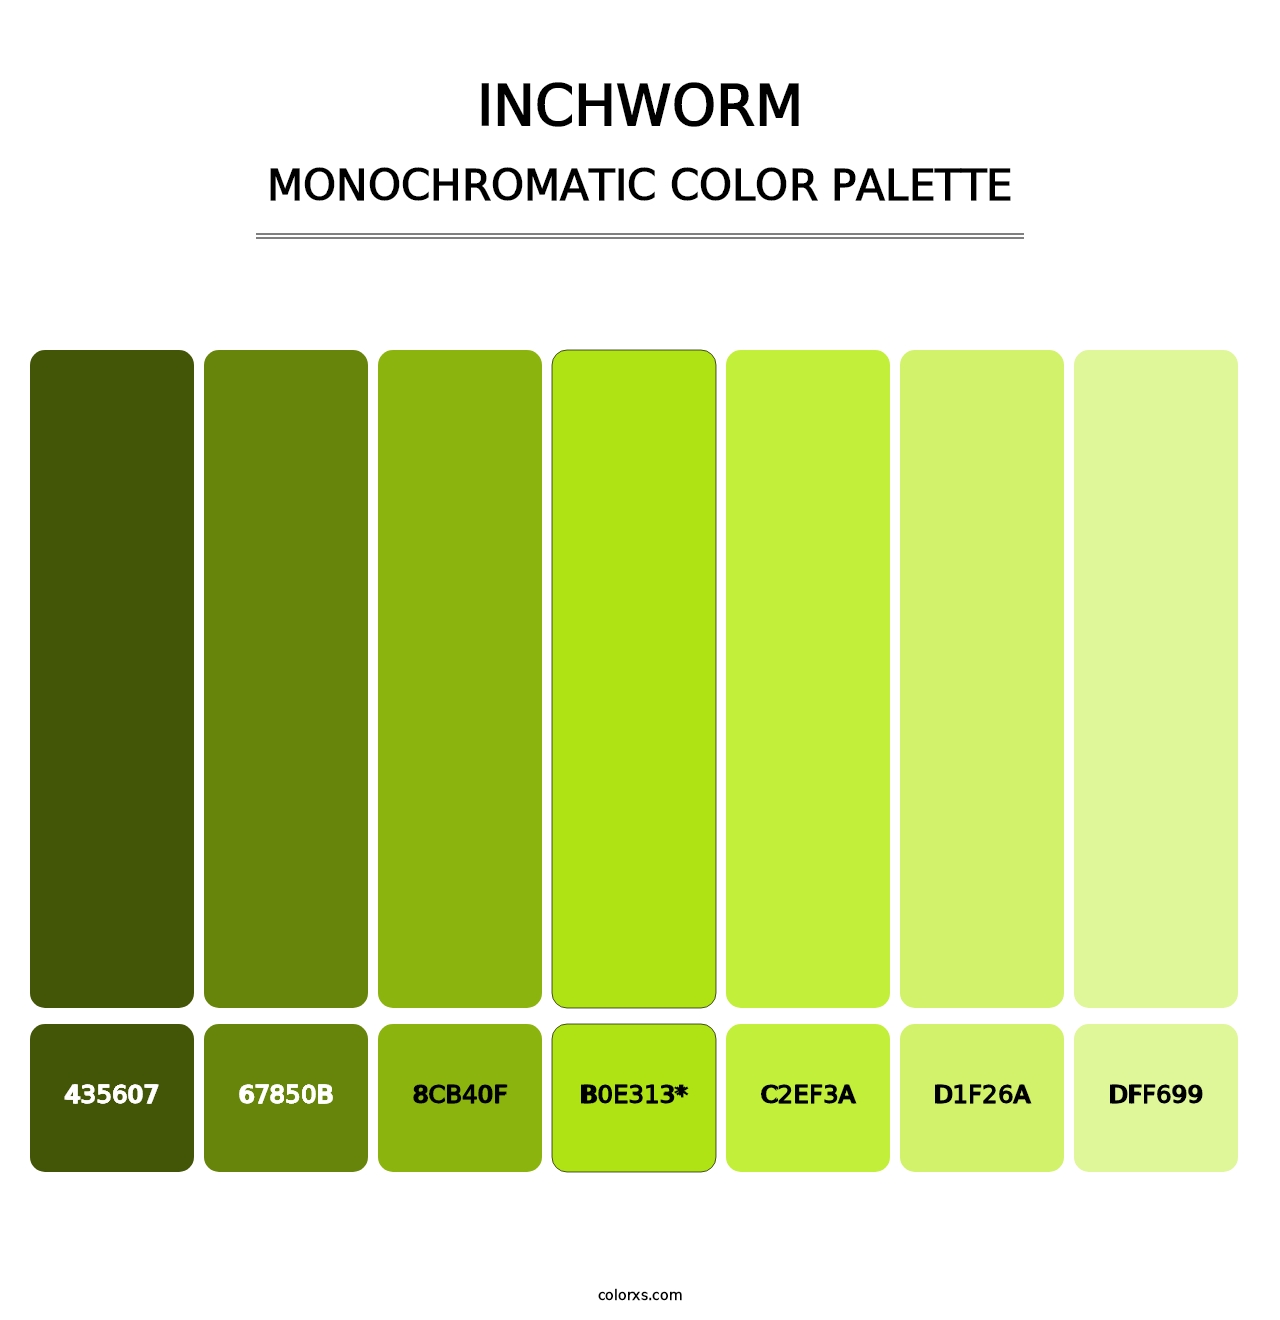 Inchworm - Monochromatic Color Palette